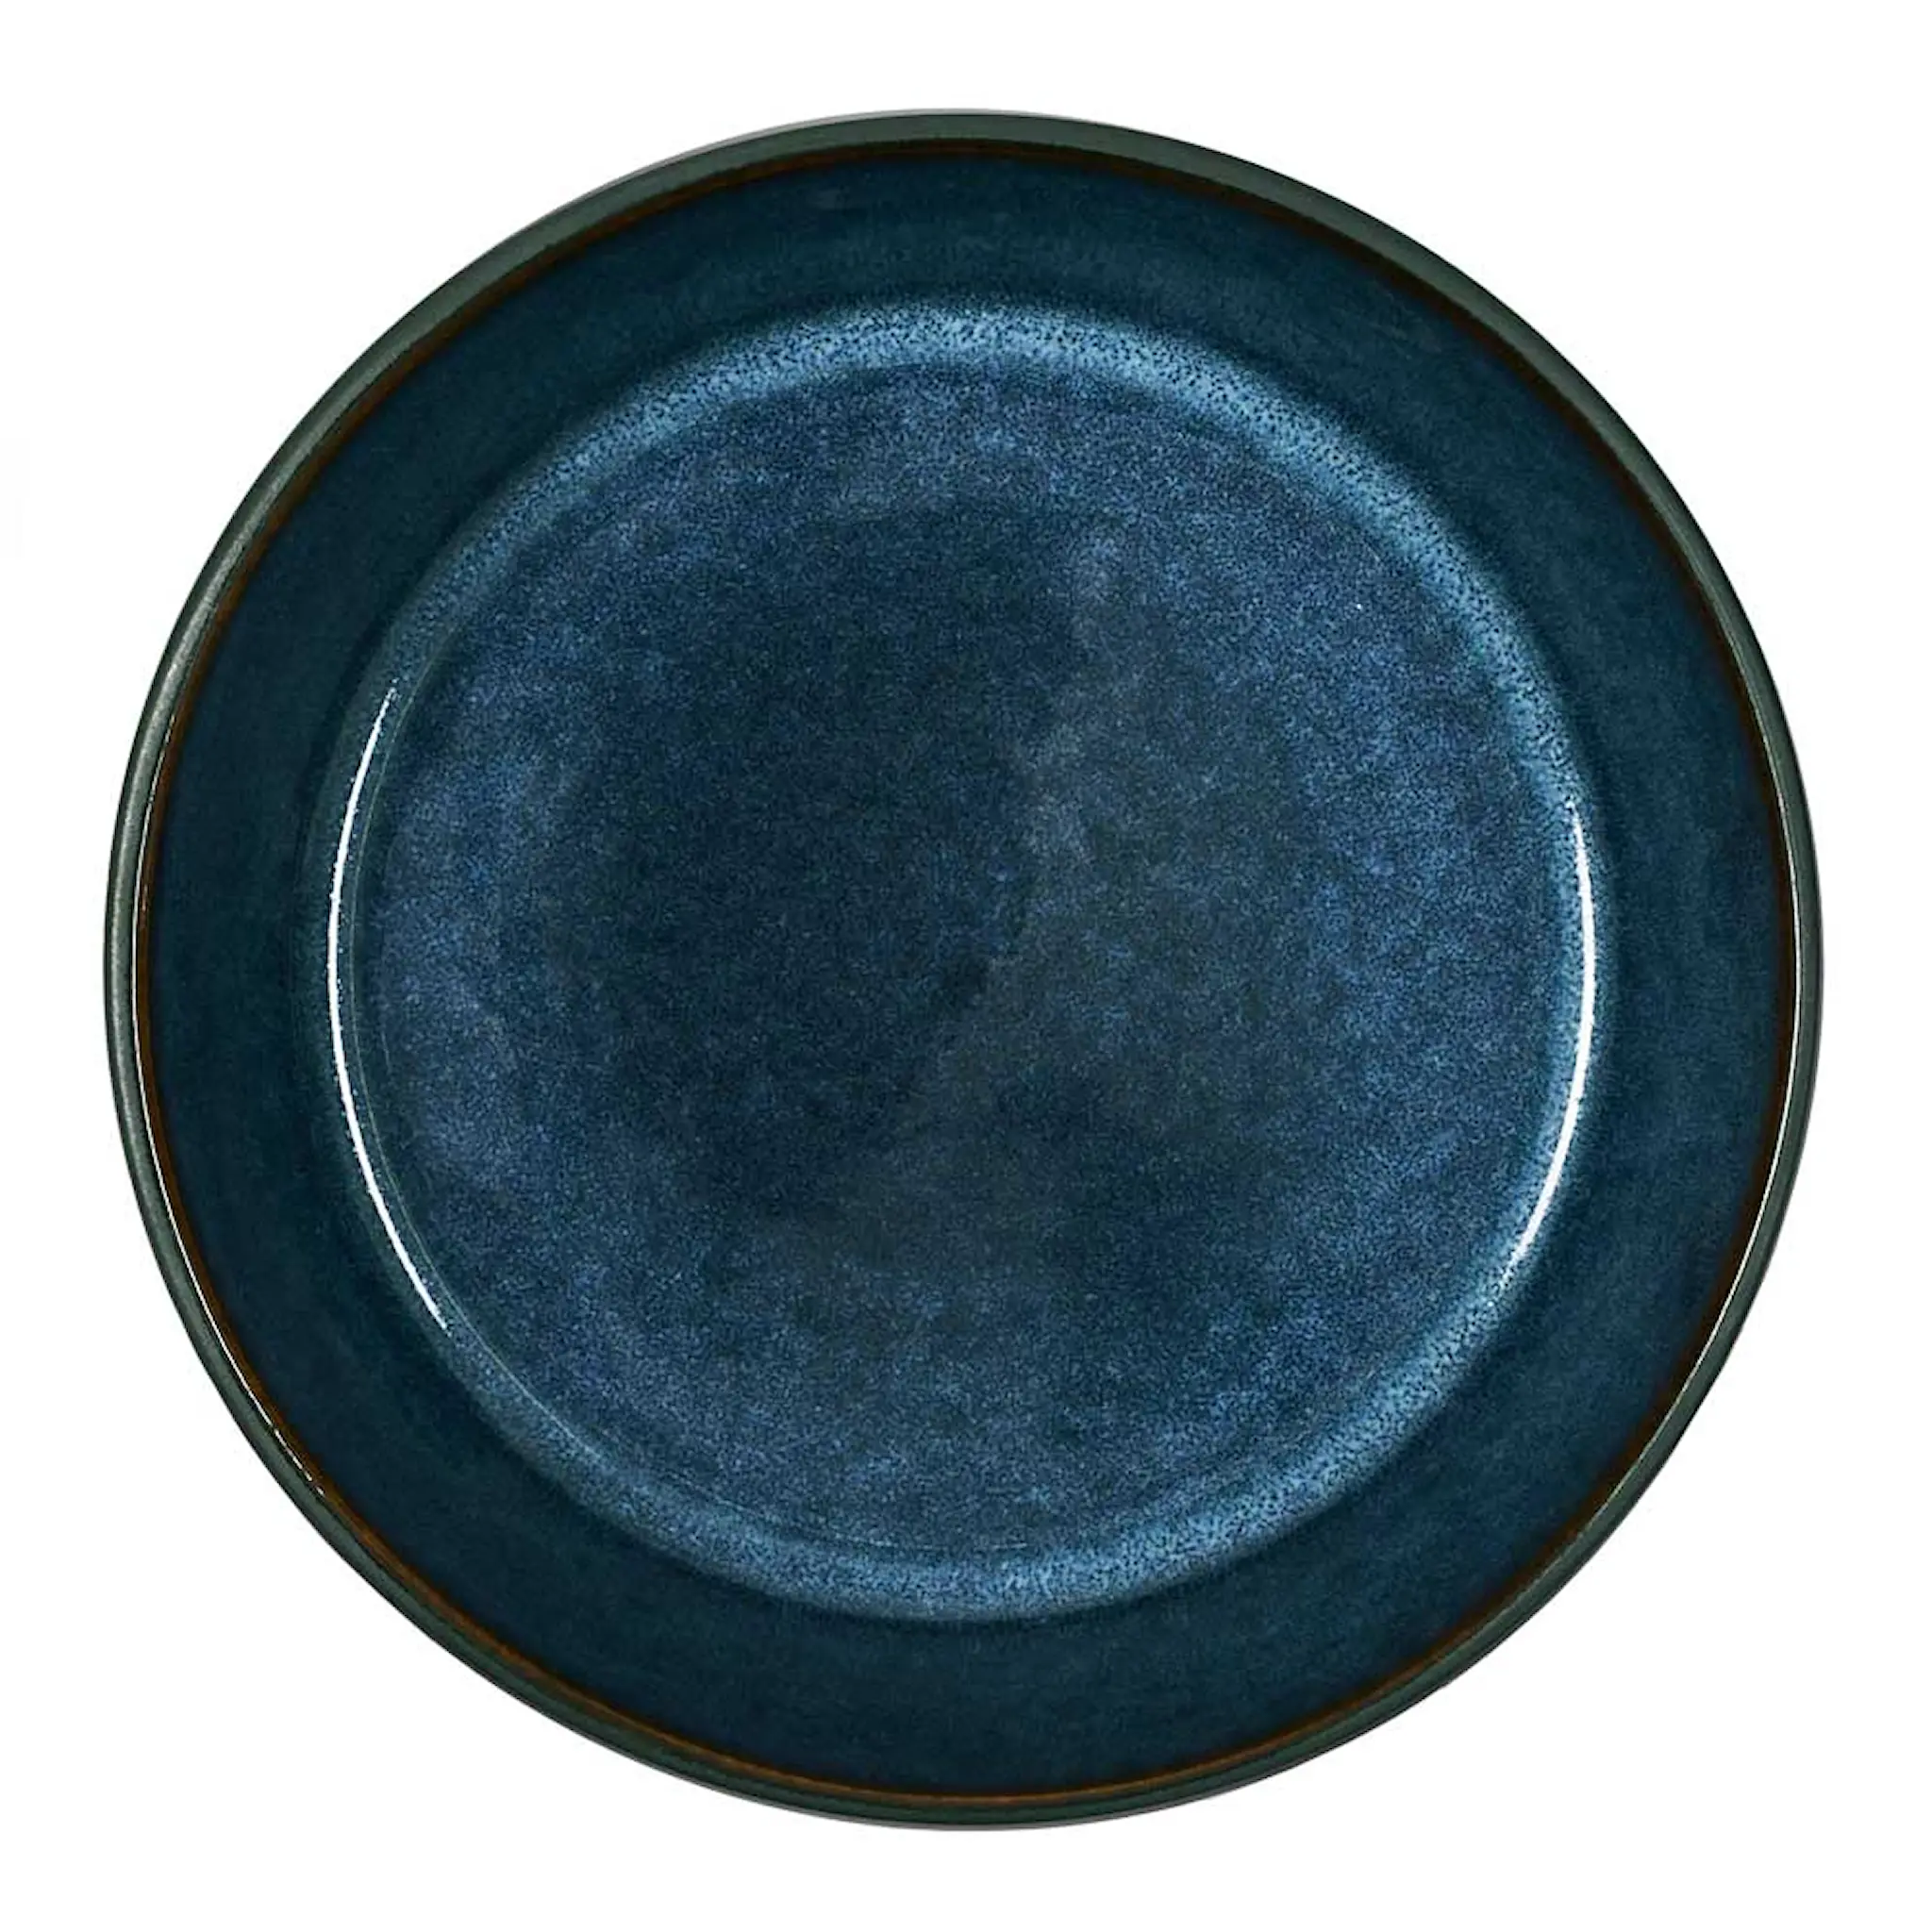 Bitz Suppeskål 18 cm svart/mørkeblå